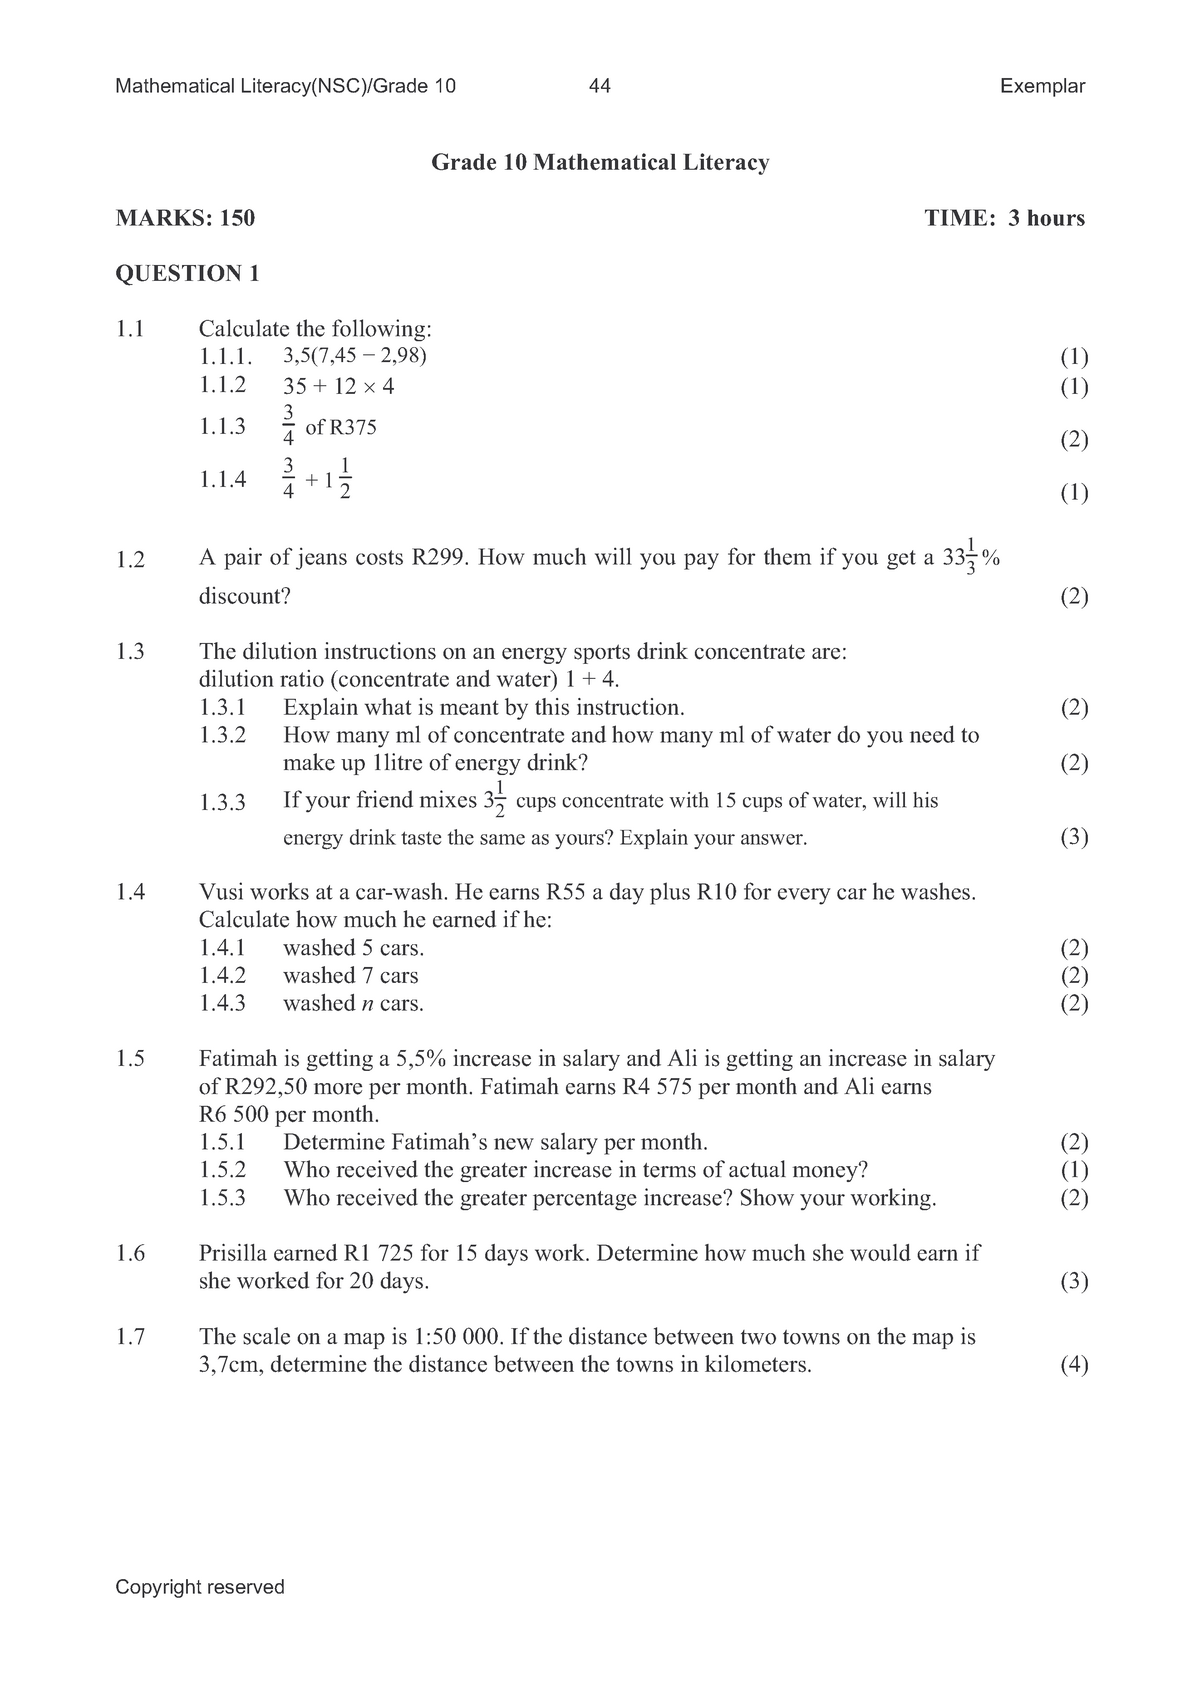 mathematical literacy grade 10 assignment term 3 pdf free